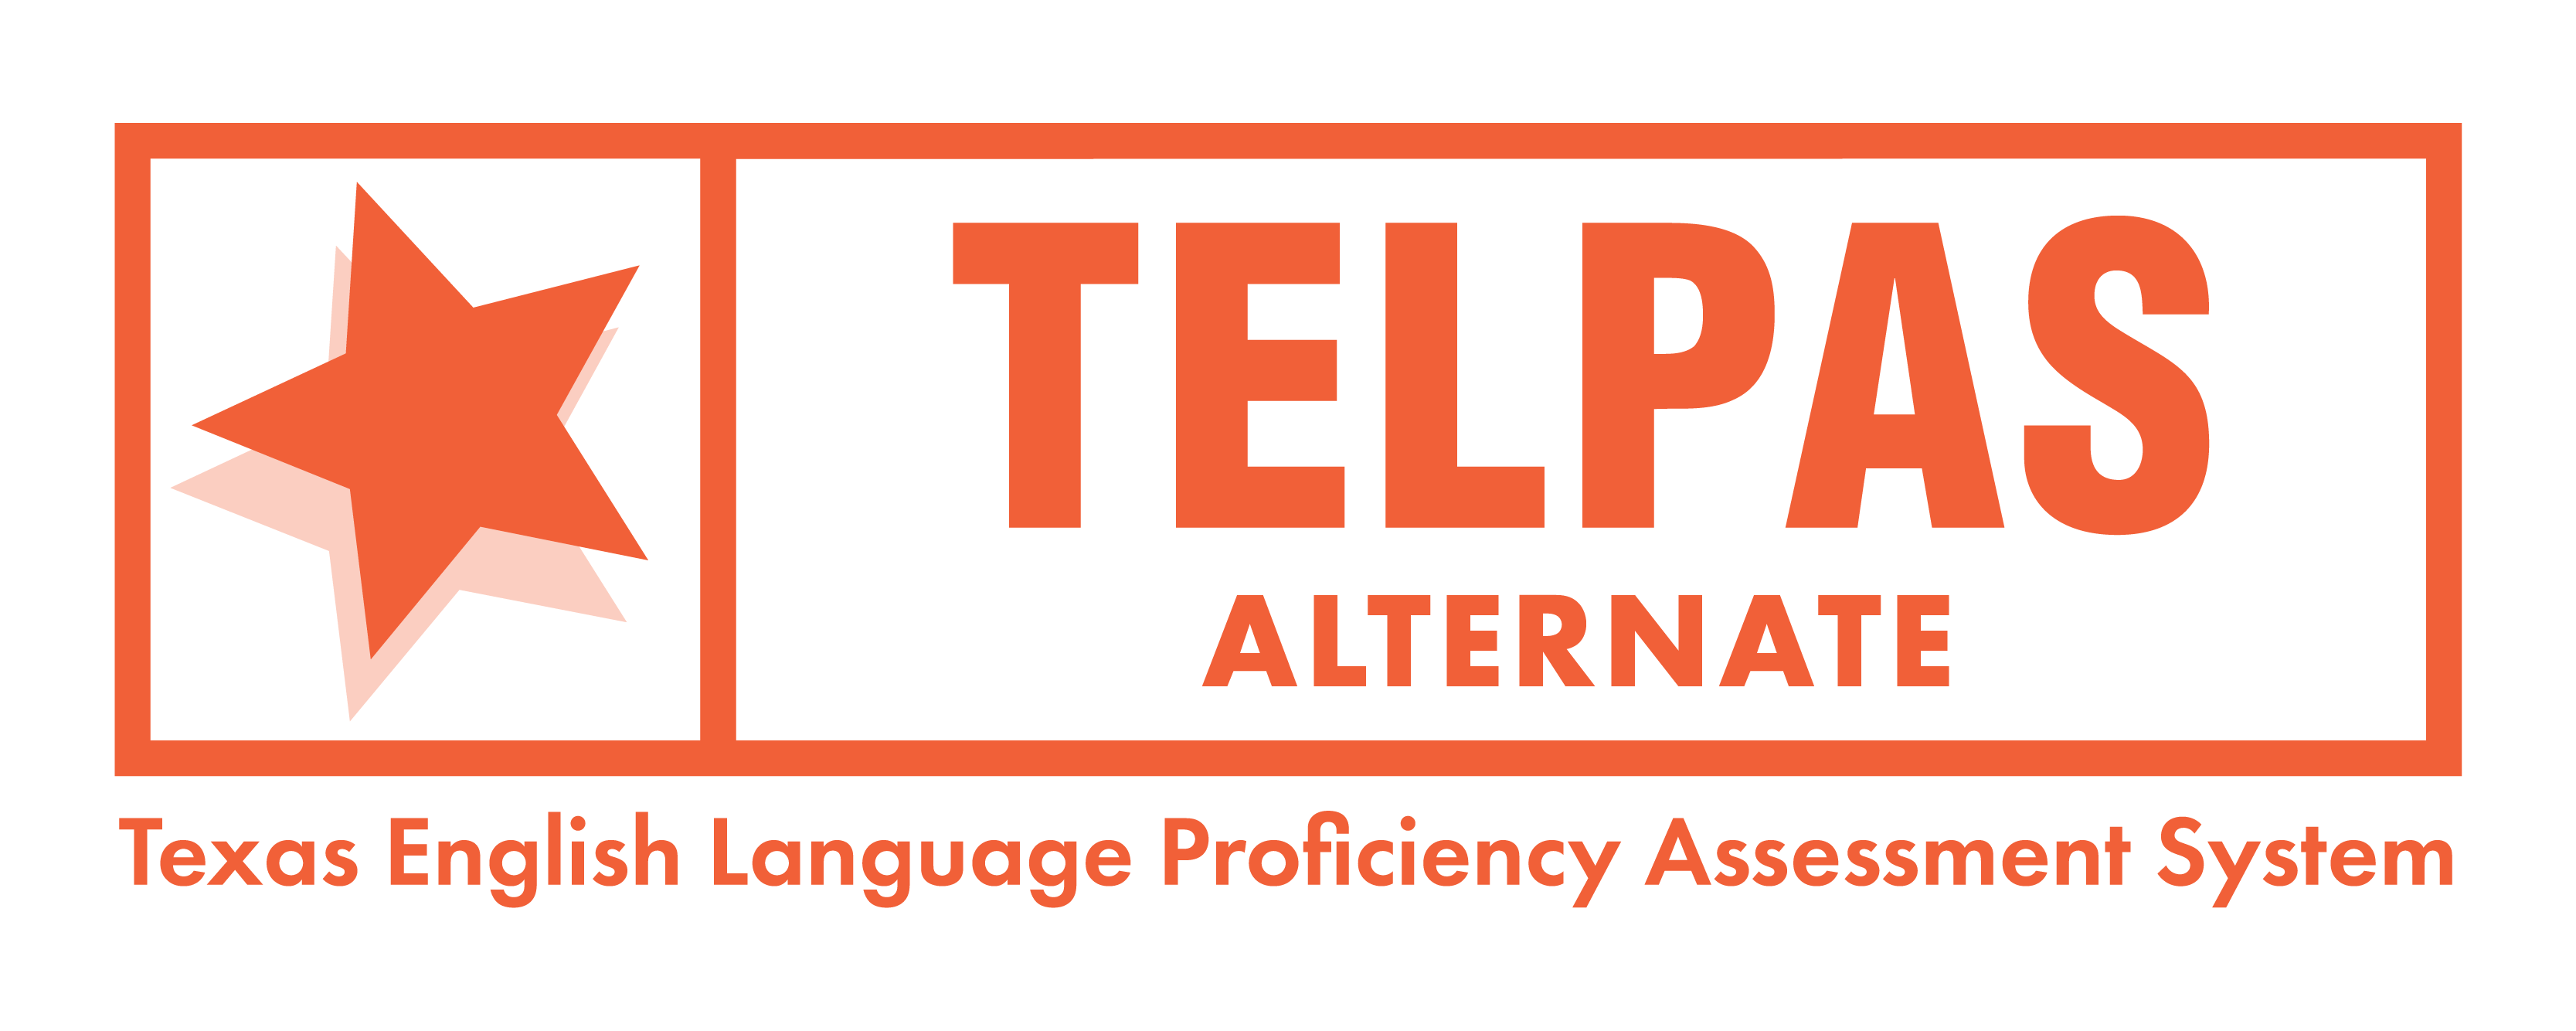 TELPAS Alternate Texas English Language Proficiency Assessment System